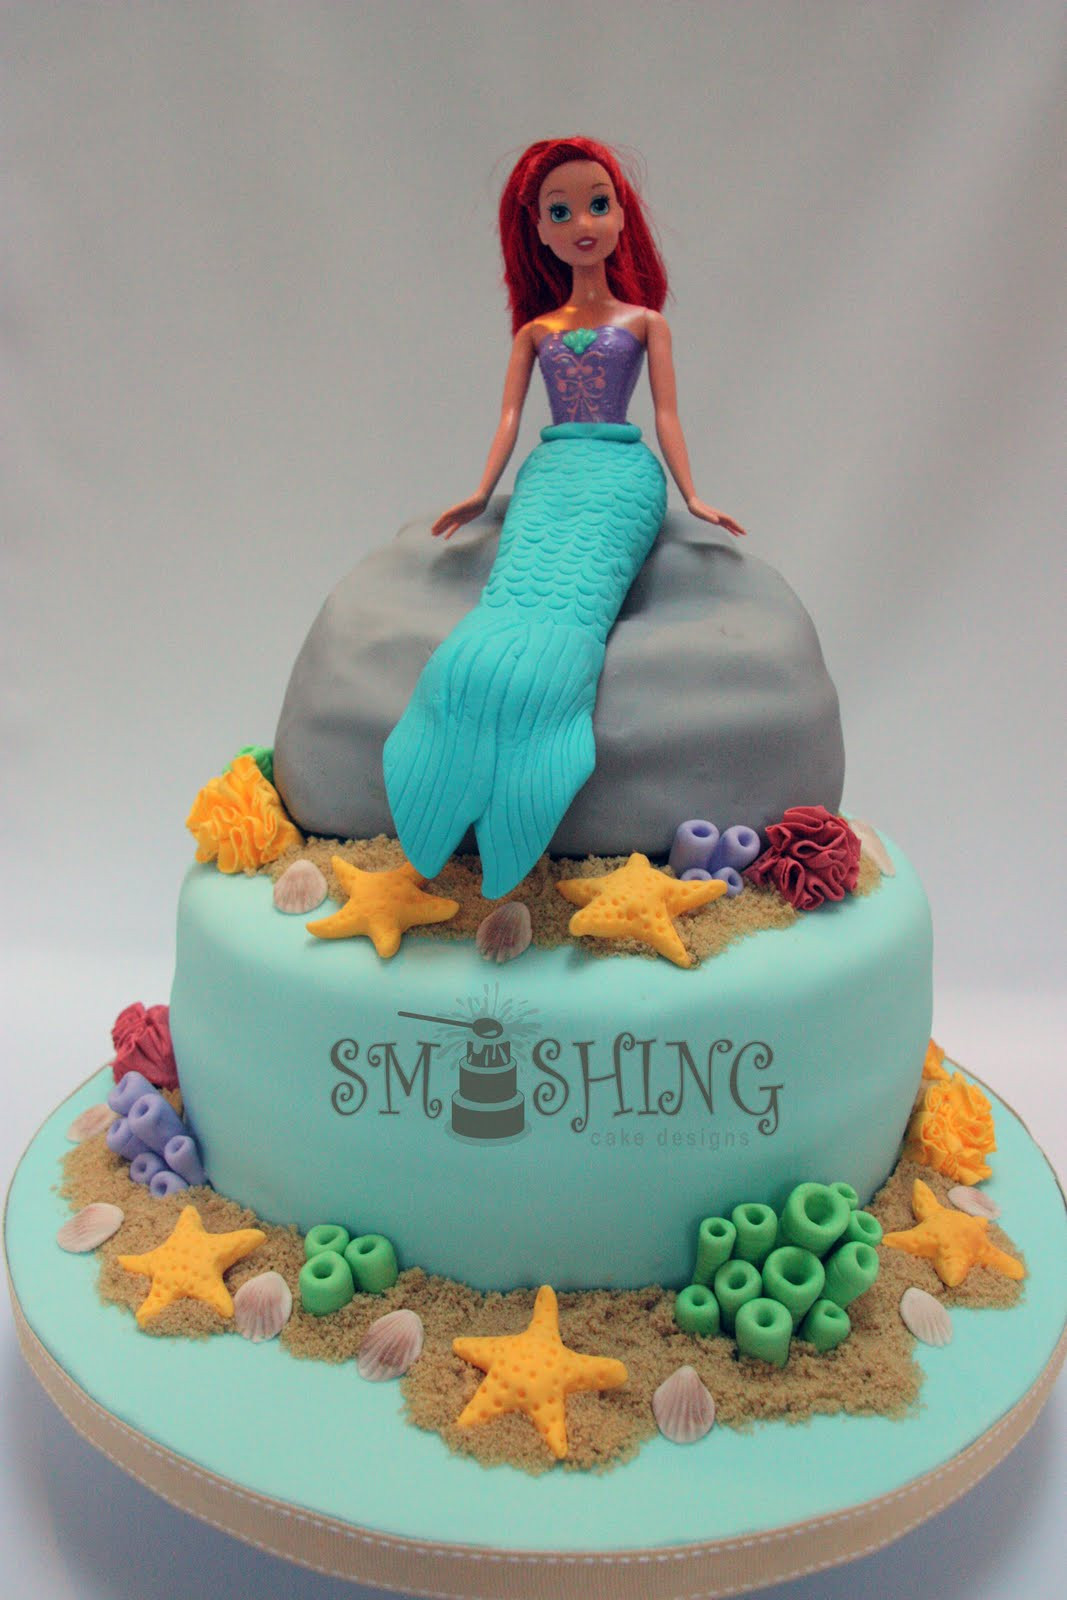 Best ideas about Ariel Birthday Cake
. Save or Pin Smashing Cake Designs Ariel Birthday Cake Now.